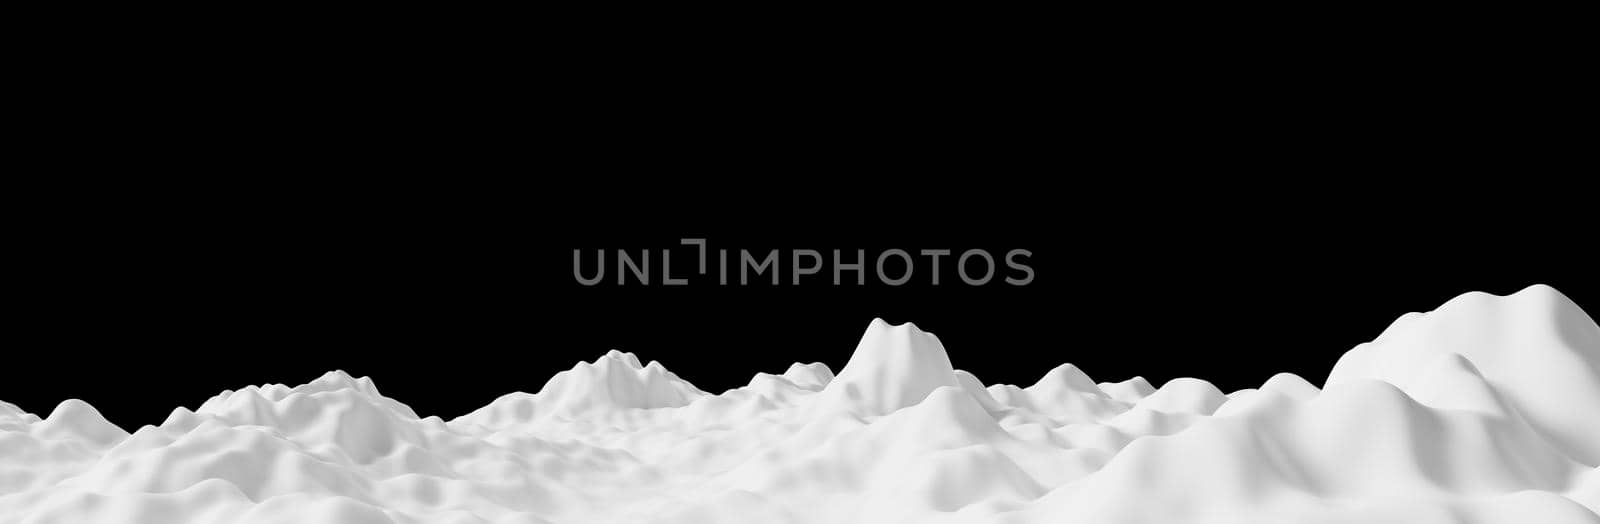 Snowdrift on black background 3D render by Myimagine